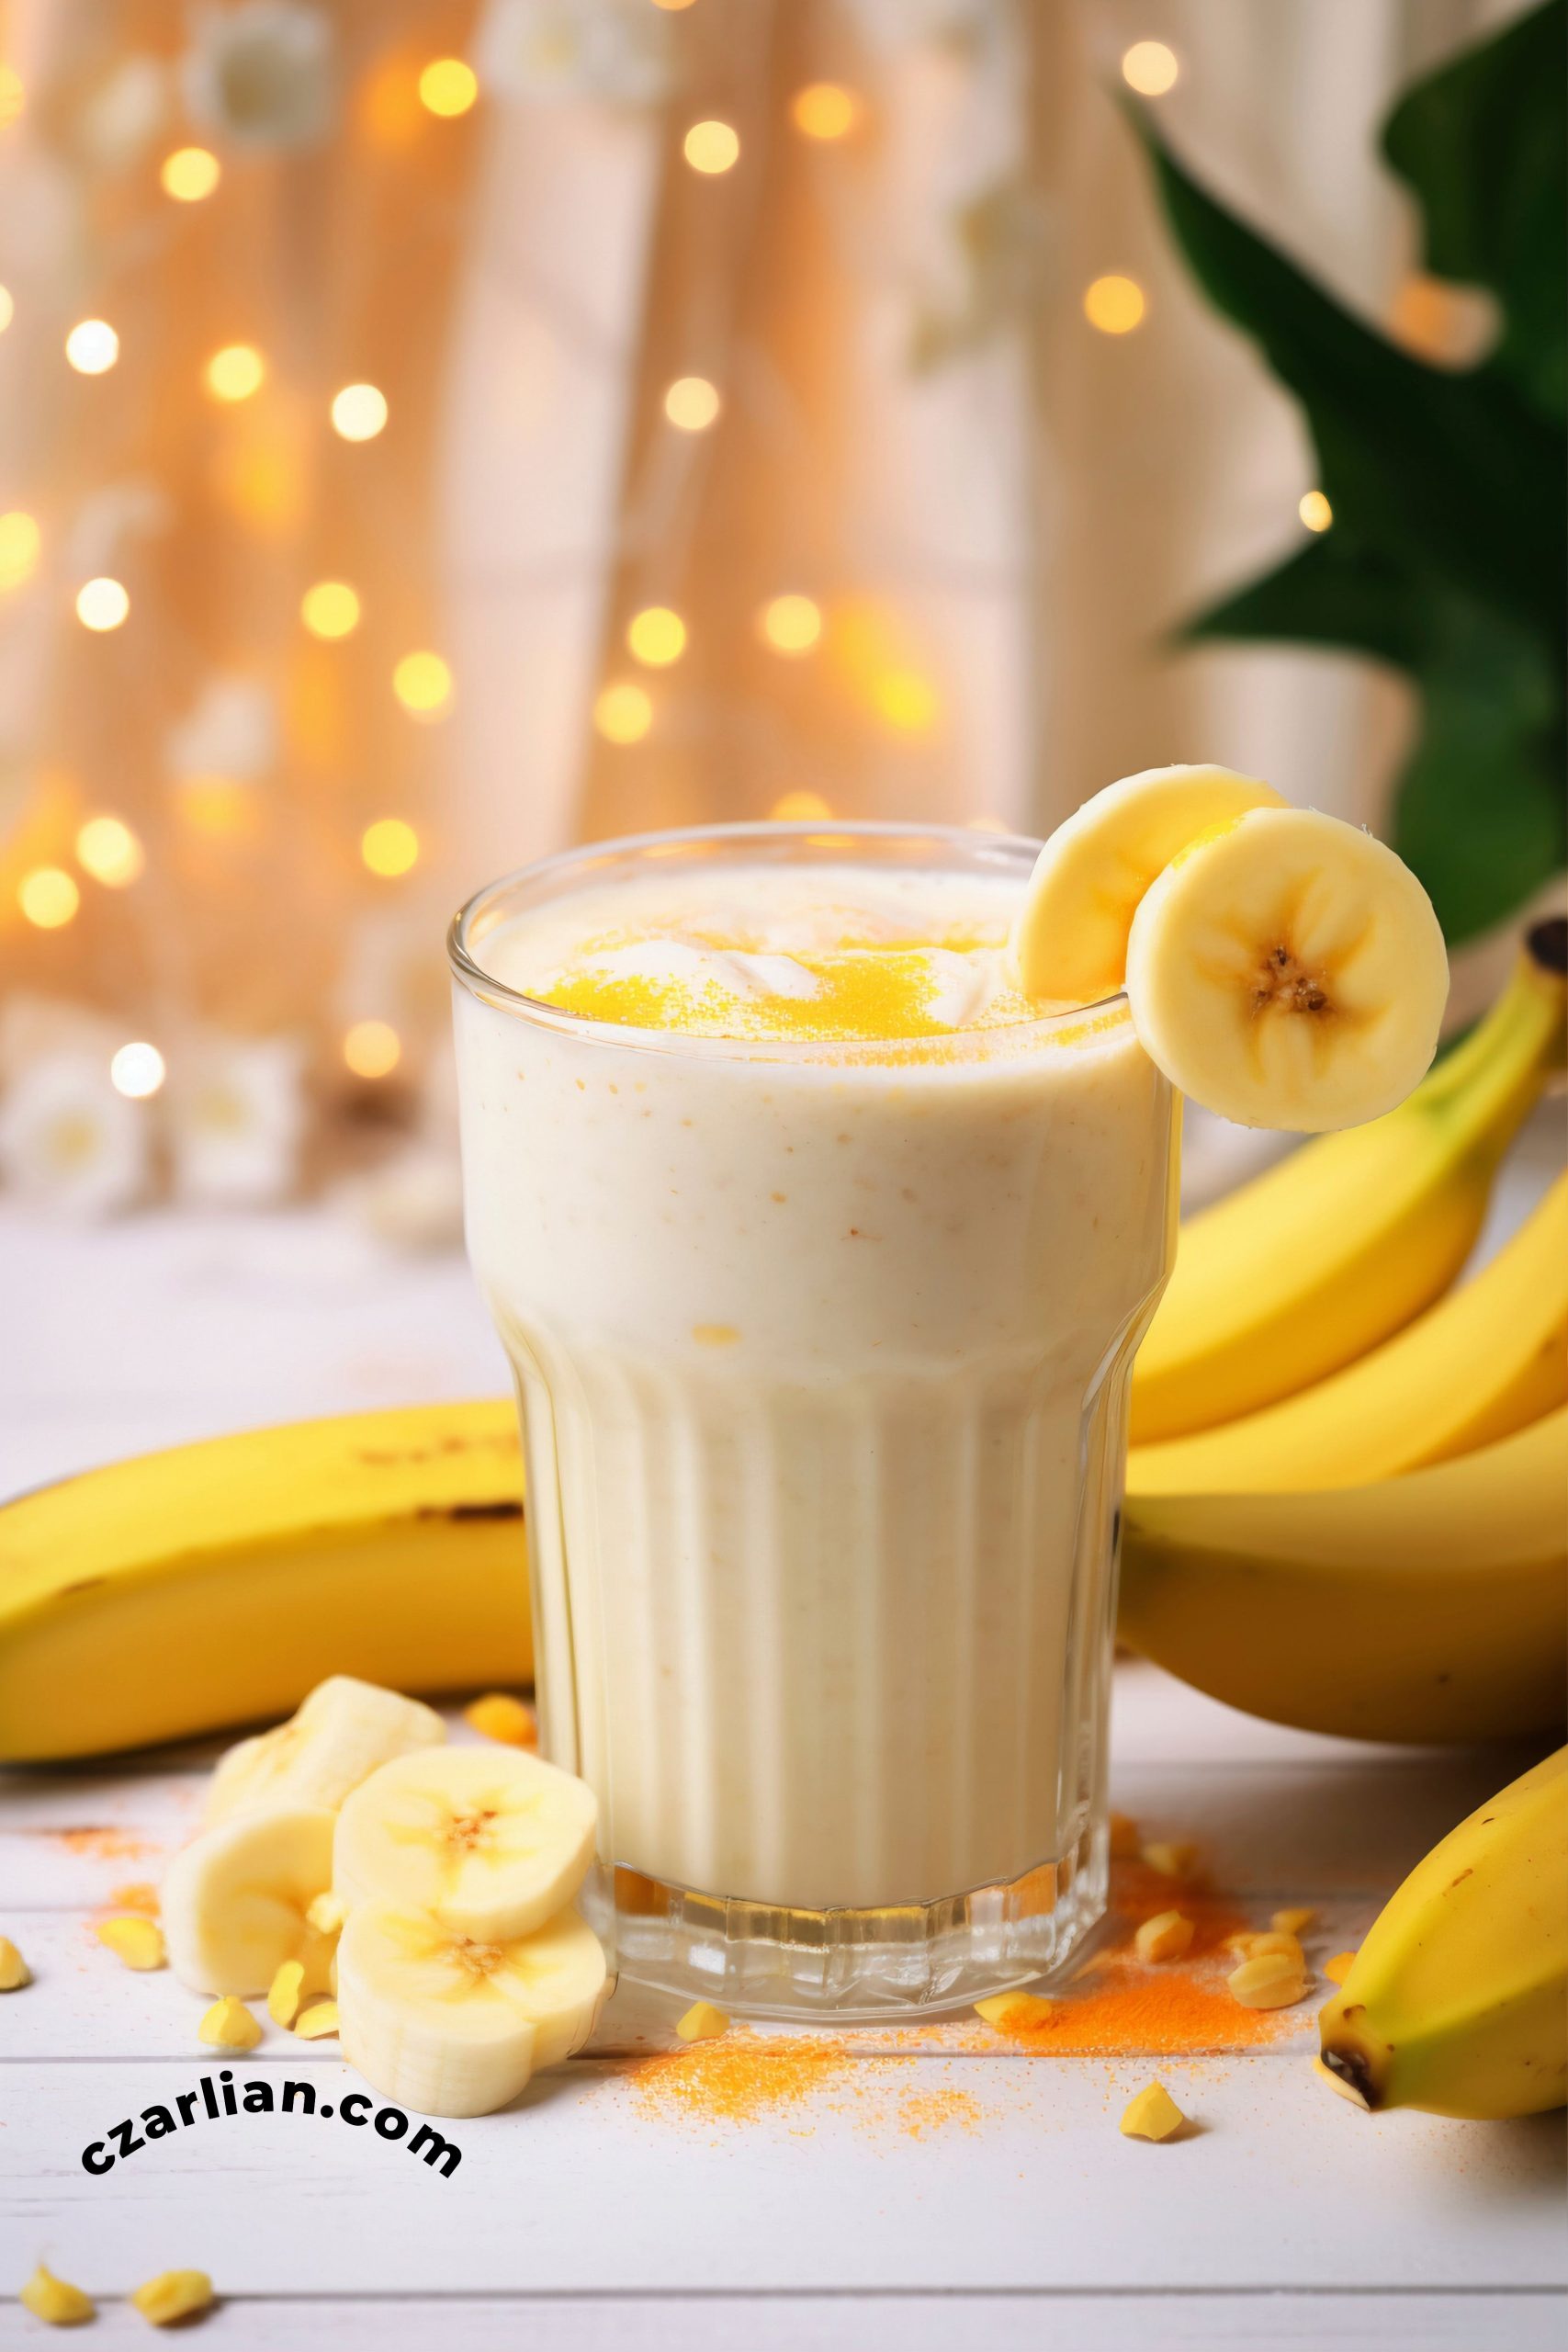 15 Incredible Health Benefits Of Bananas